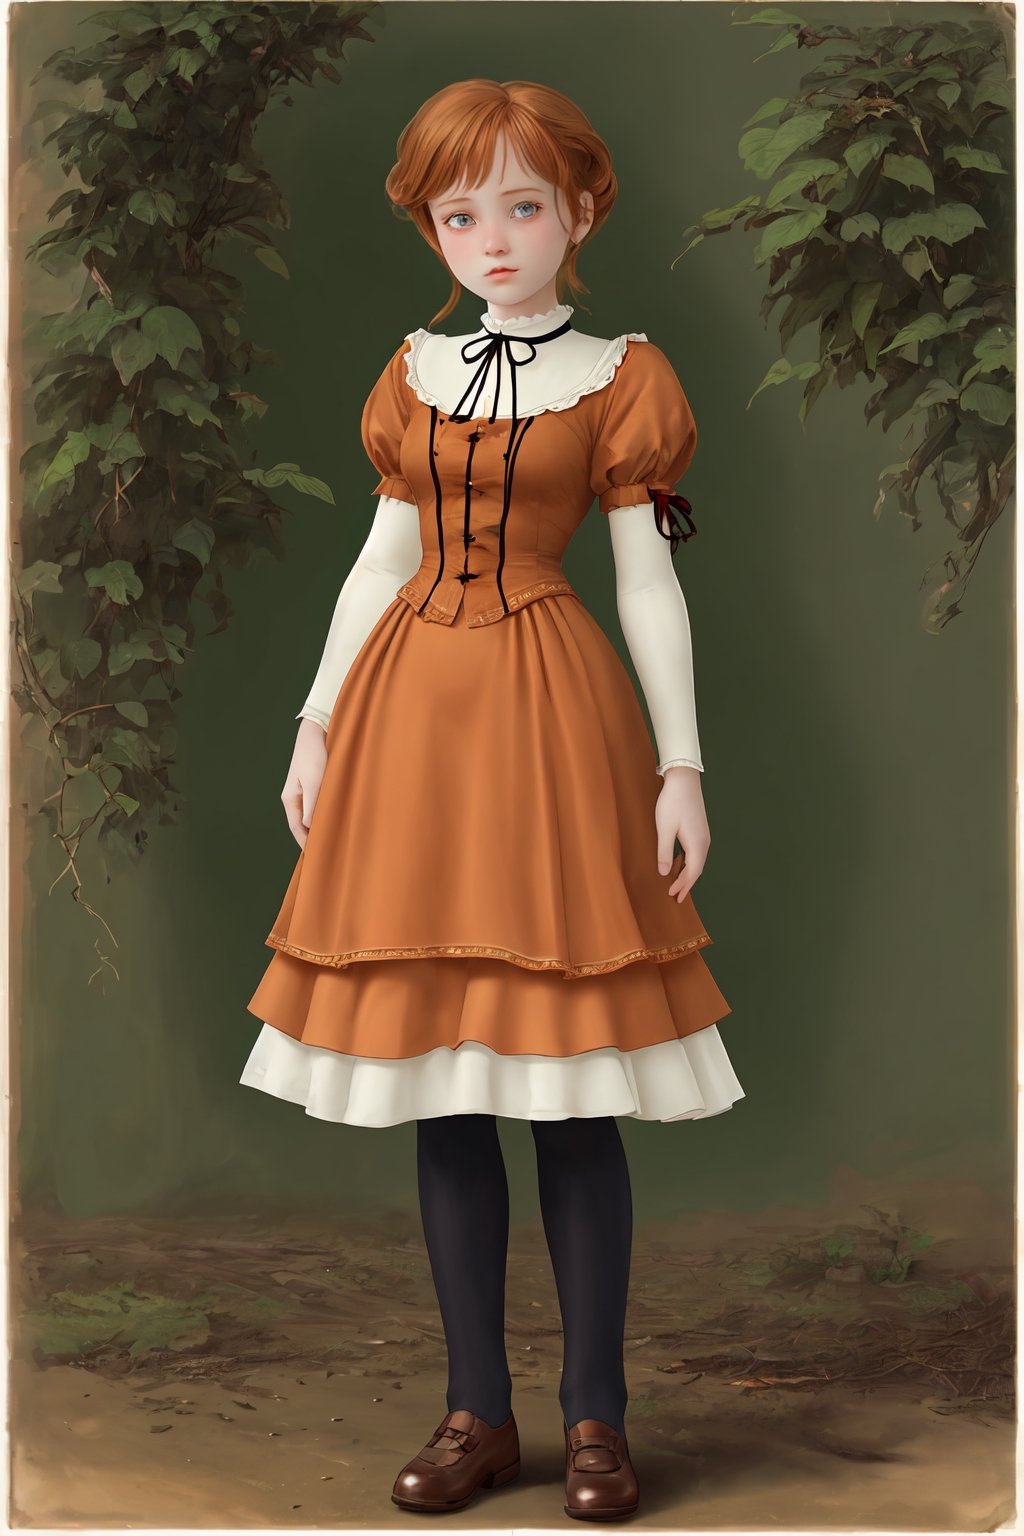 12 yo ginger girl  1900's fashion,EpicArt